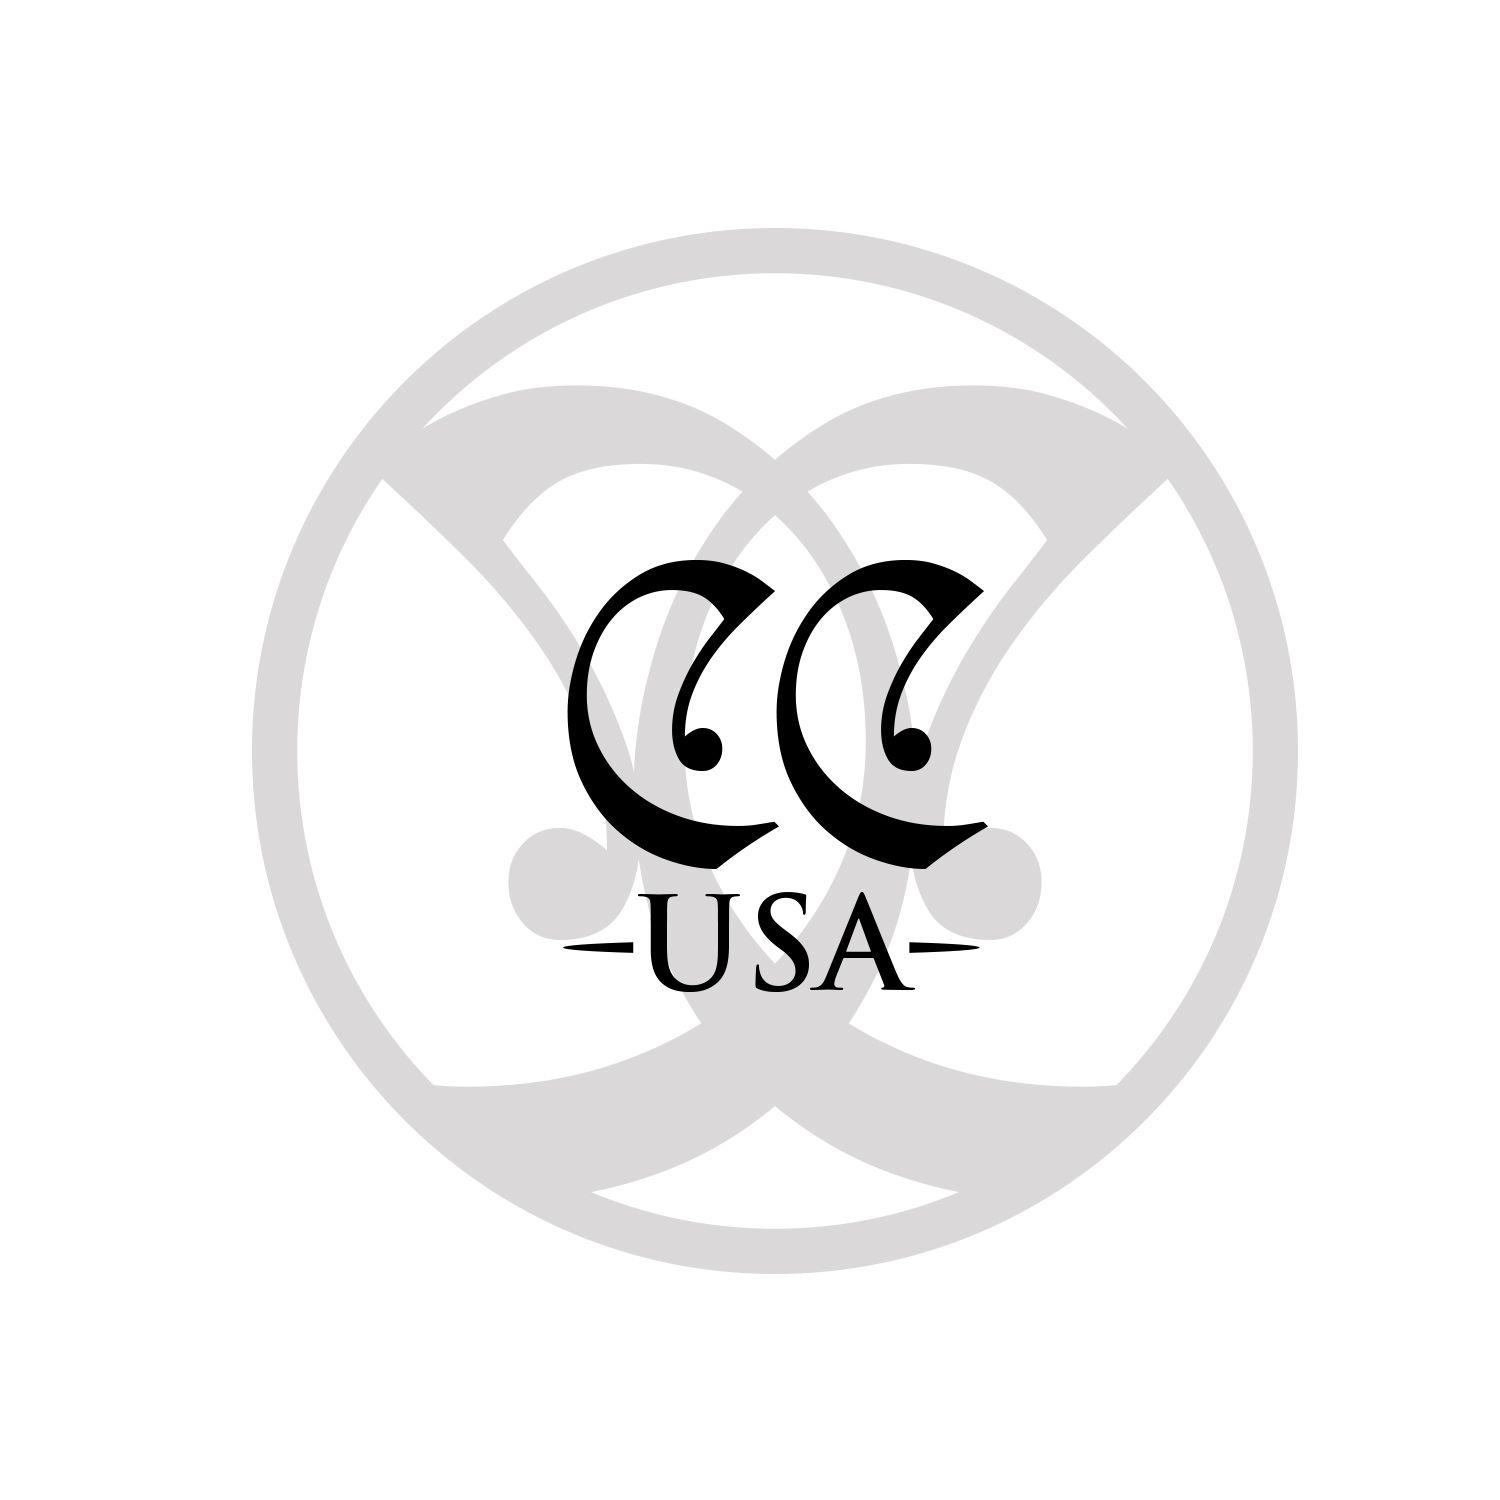 CC Fashion Logo - Feminine, Elegant, Fashion Logo Design for CC USA by maria-kaz ...